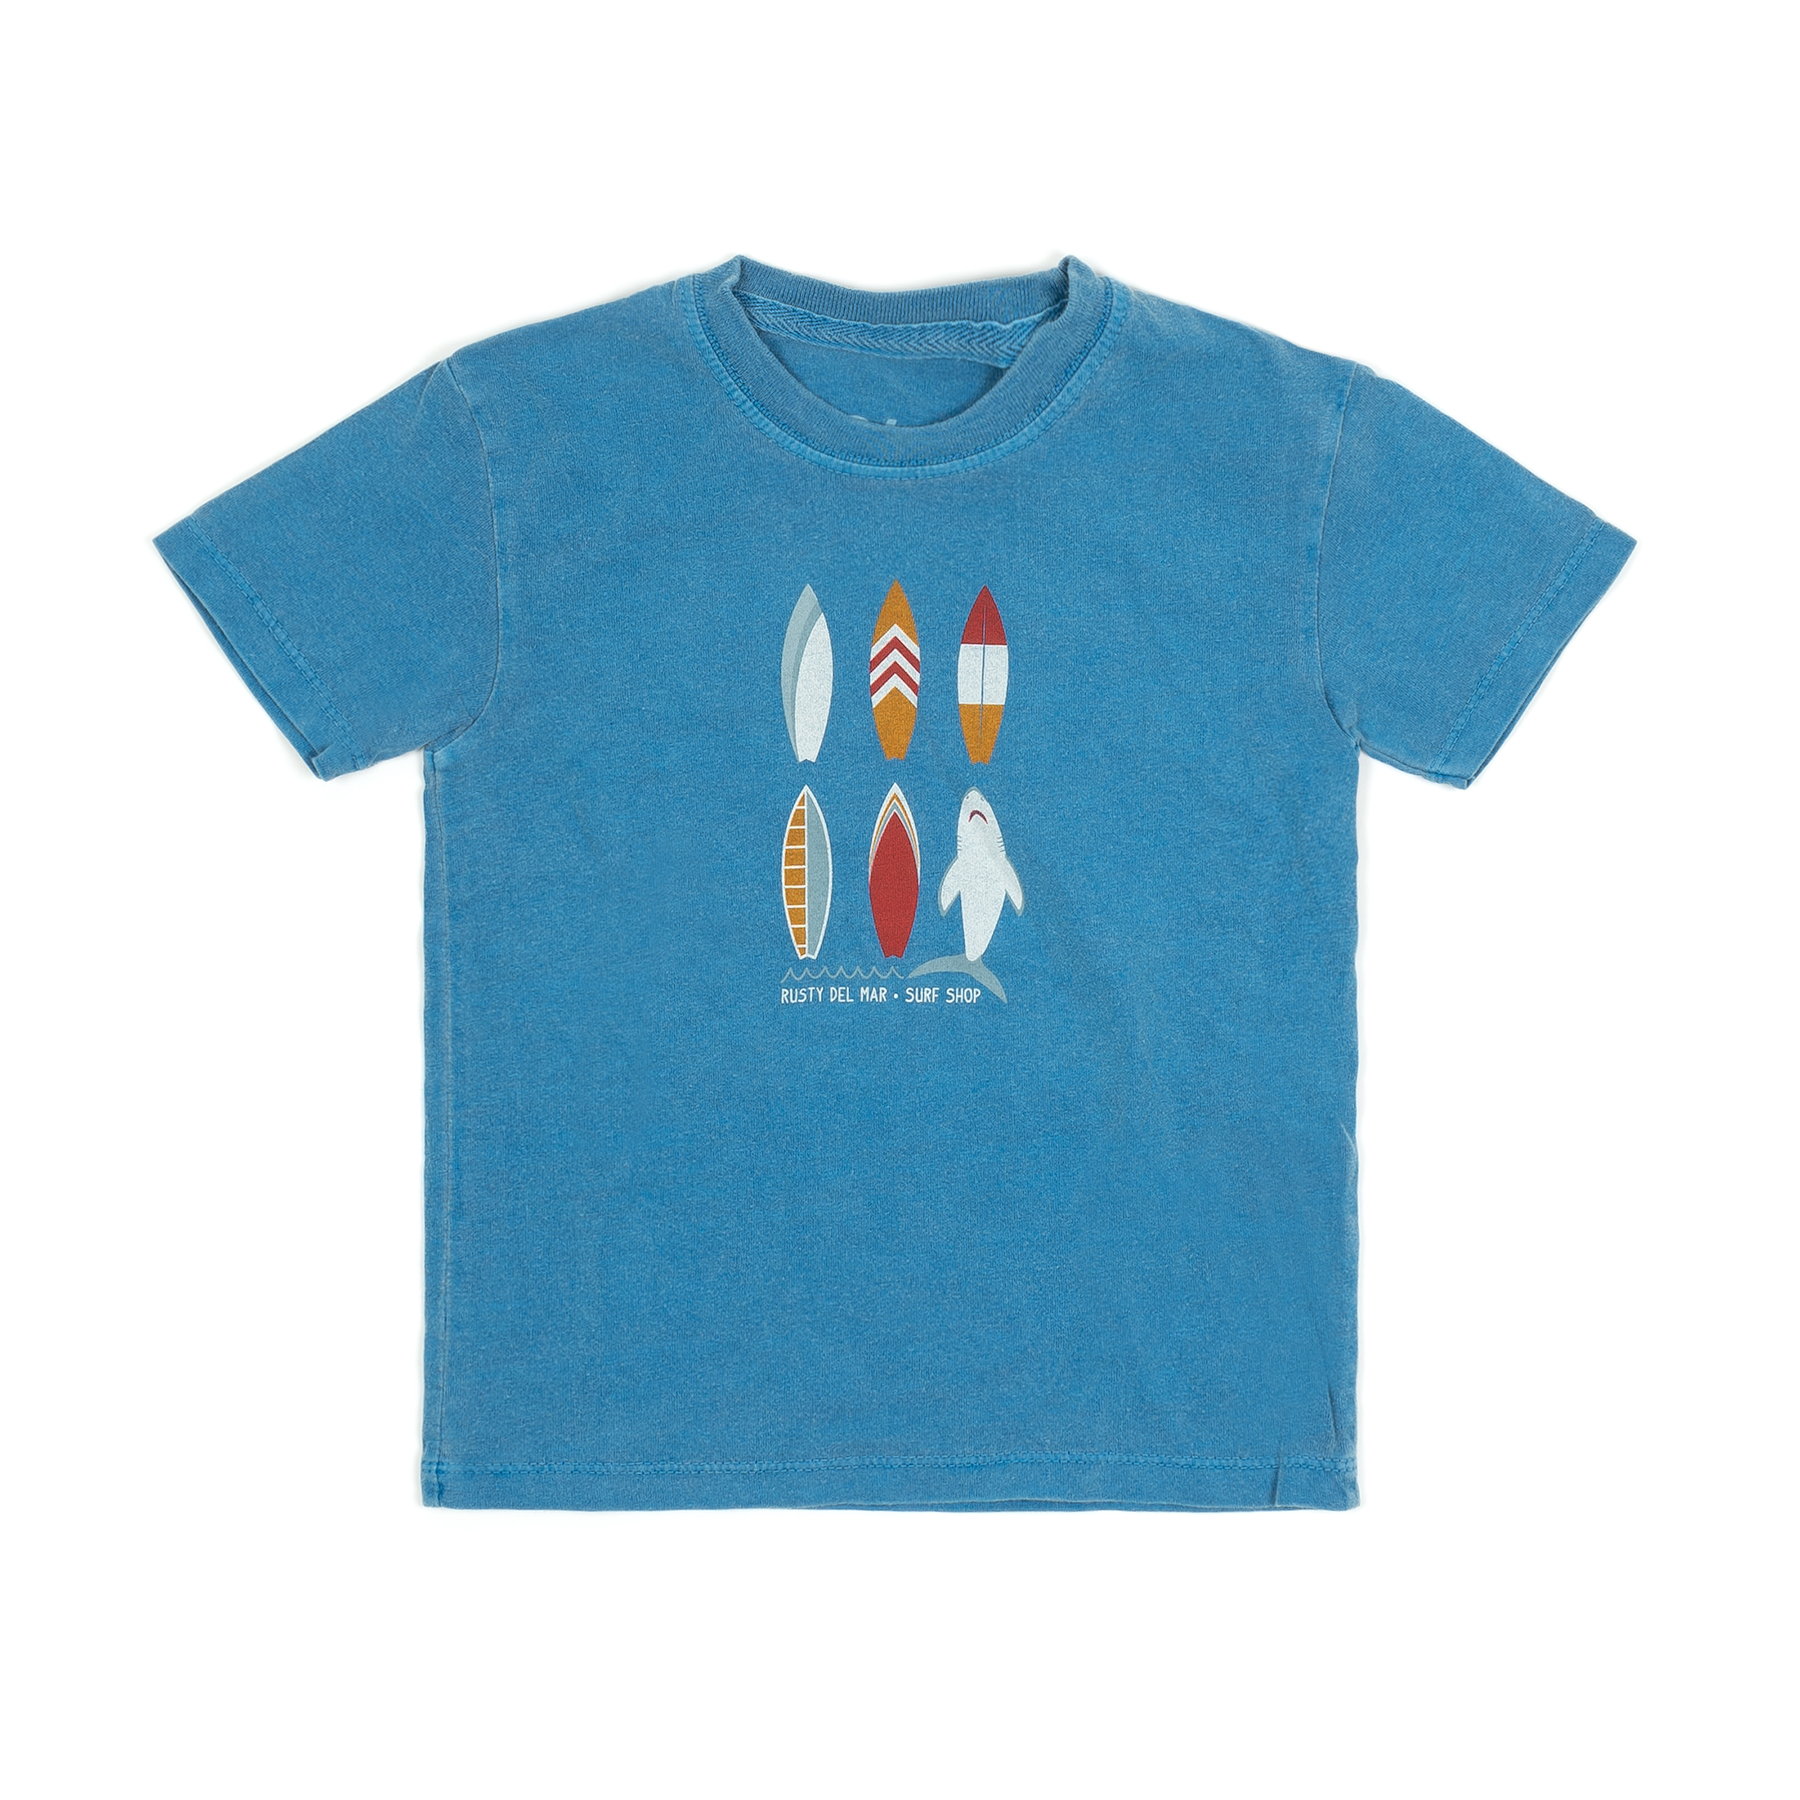 Rusty Del Mar Youth Oddball T-shirt in Pacific Blue